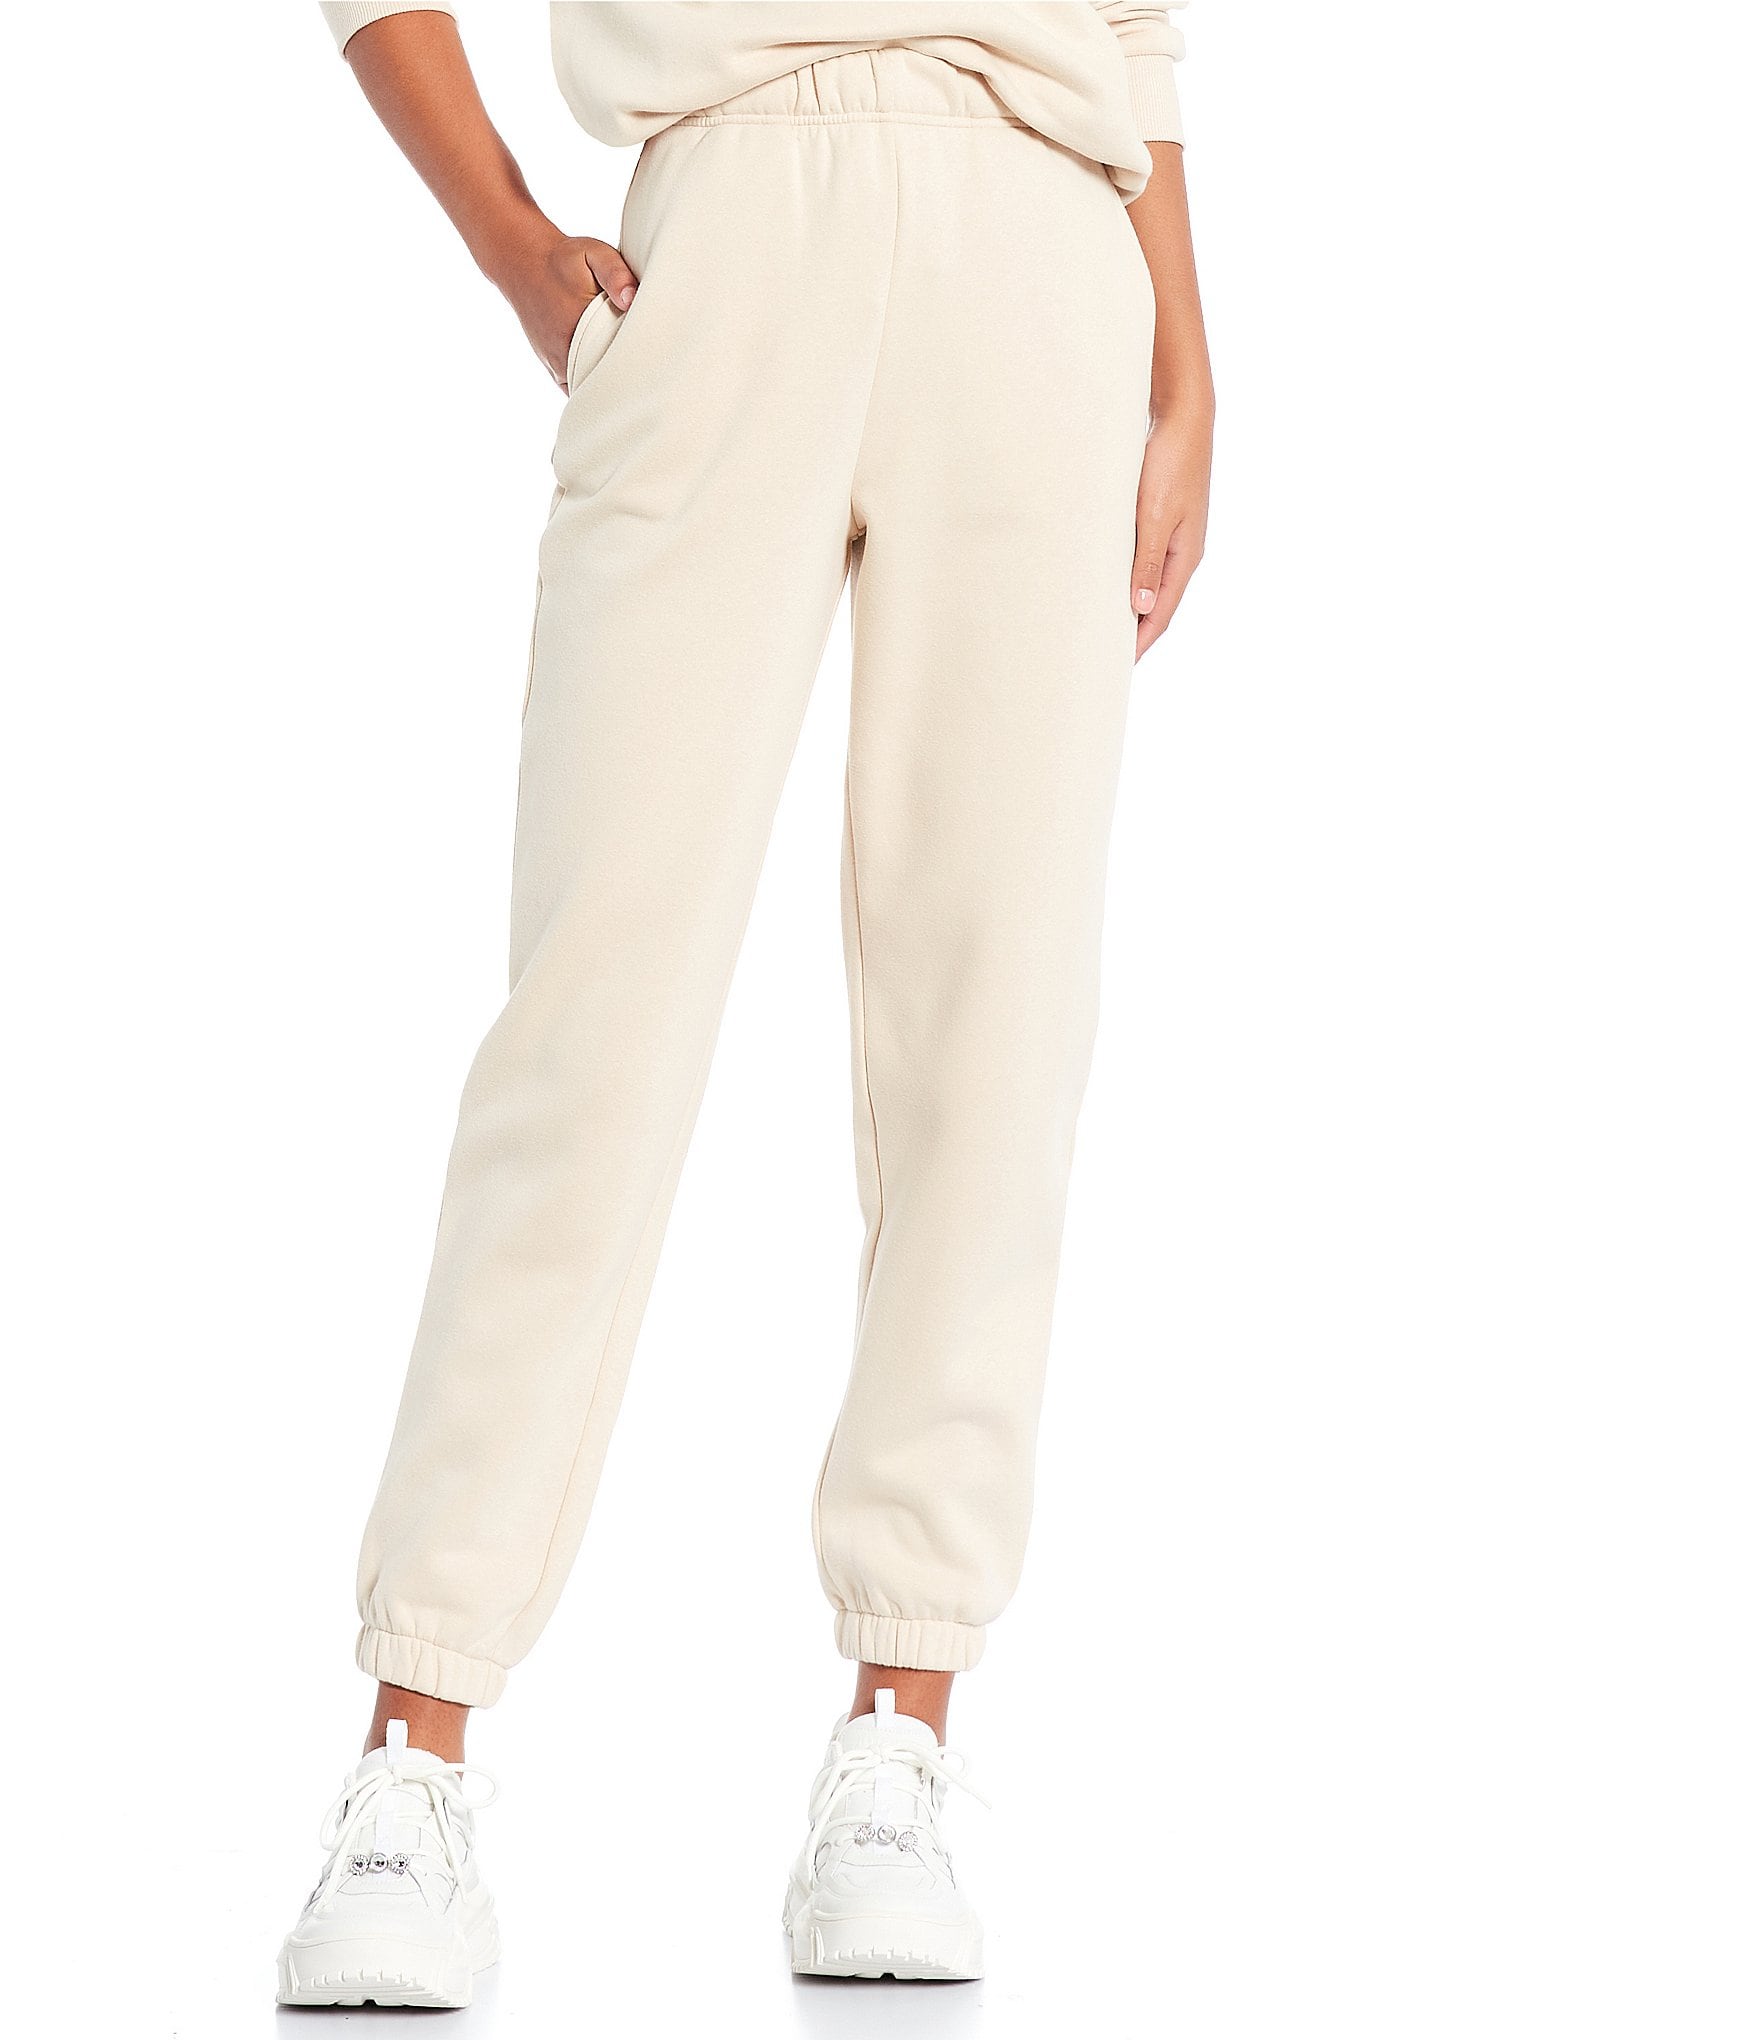 Korean Sports Pants for Women Sweatpants White Quick Drying High